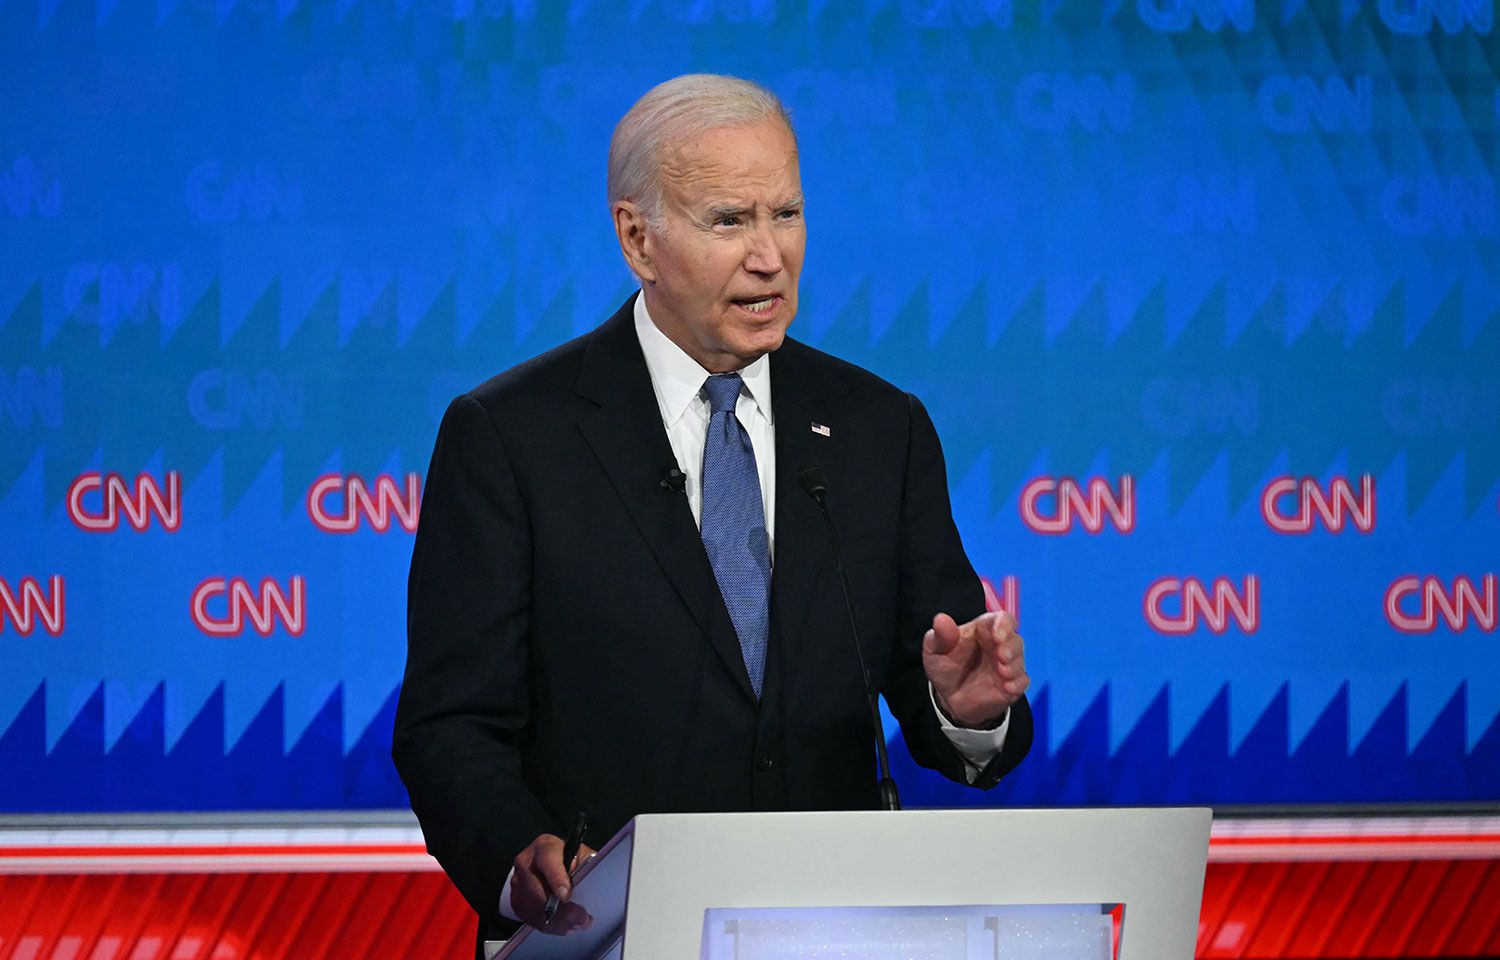 Biden Campaign Raises $27 Million After First Debate